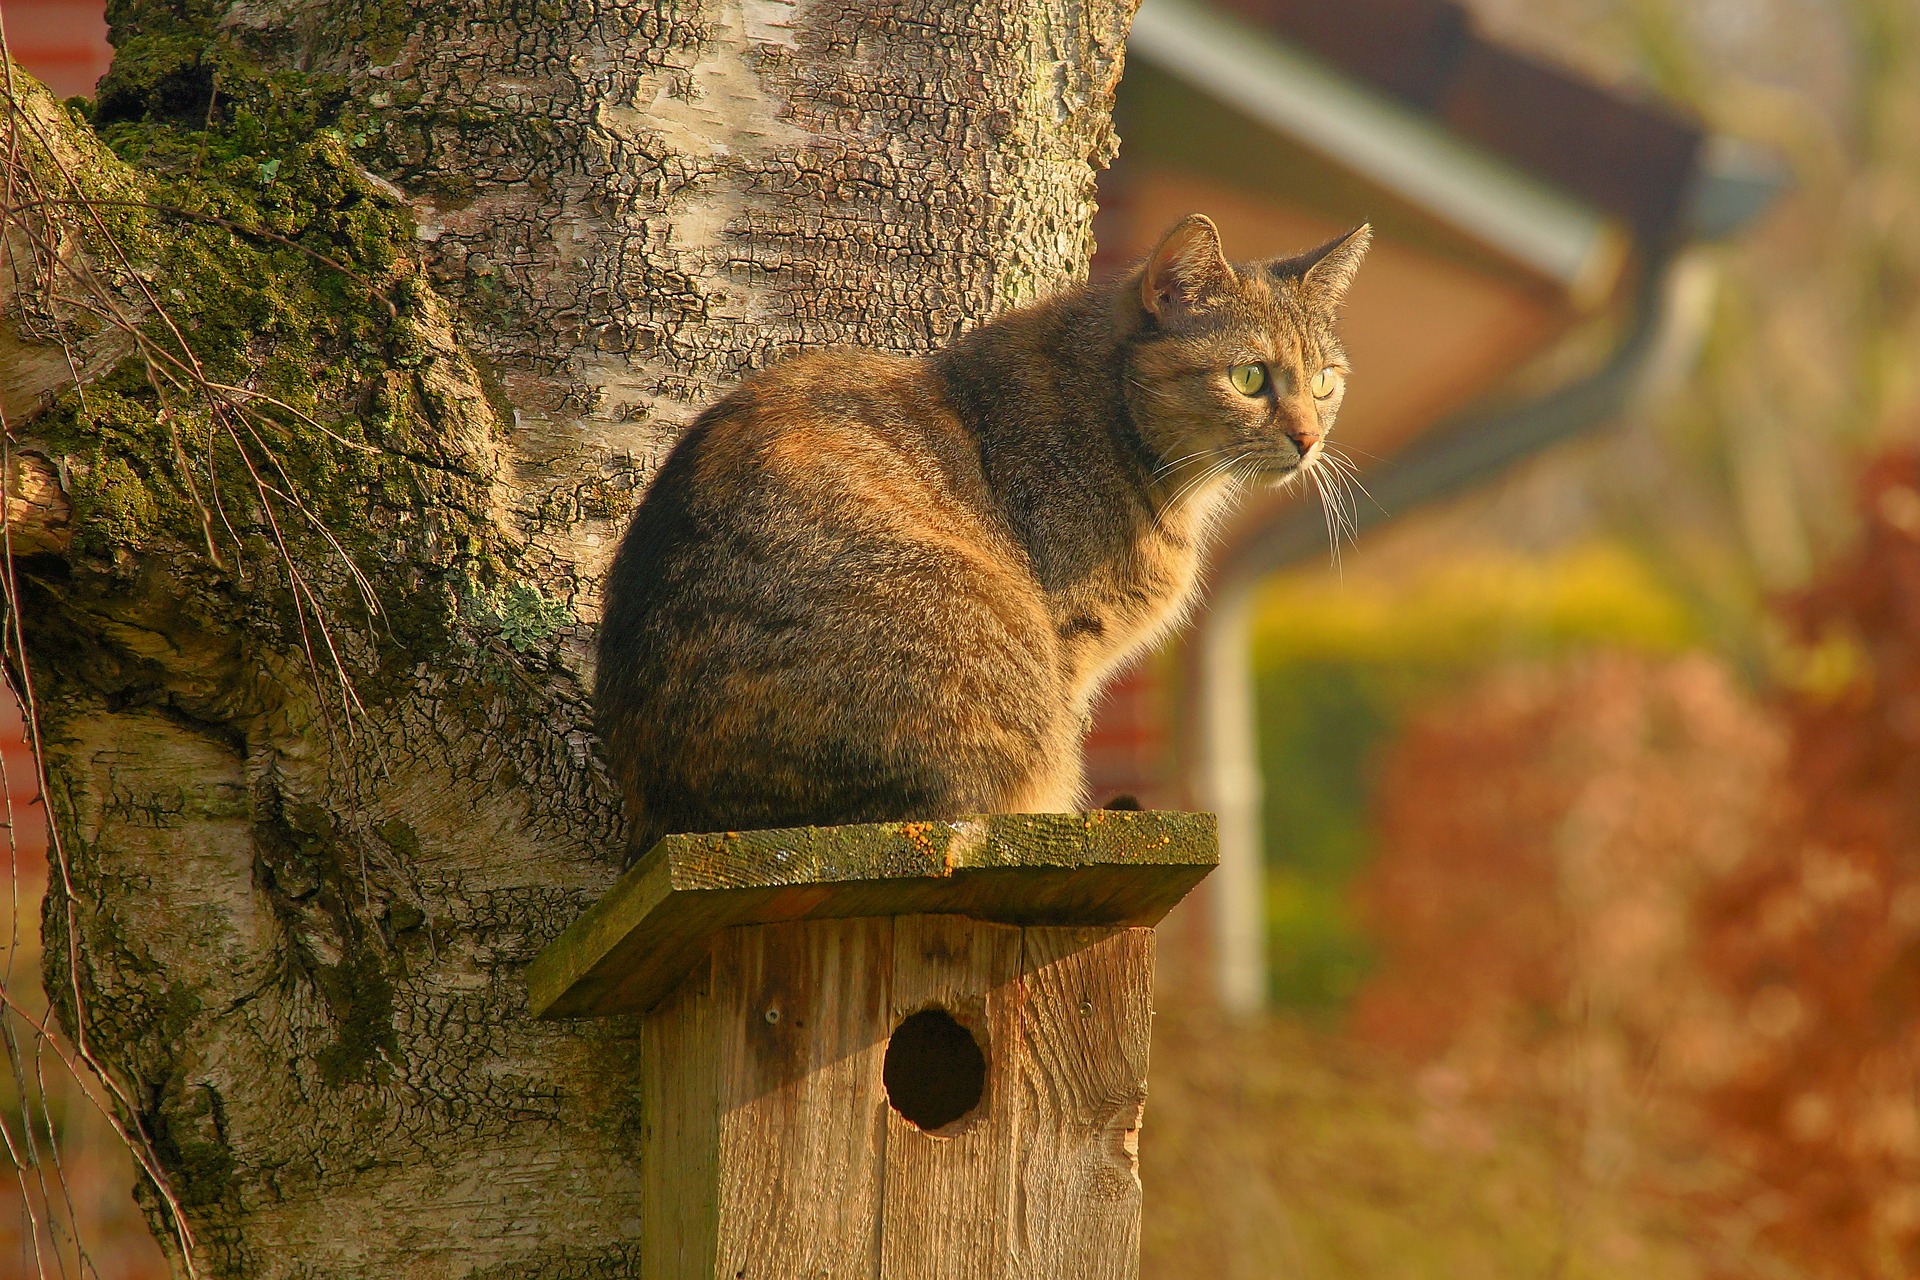 Cat Sitting on a Bird House by Kapa65